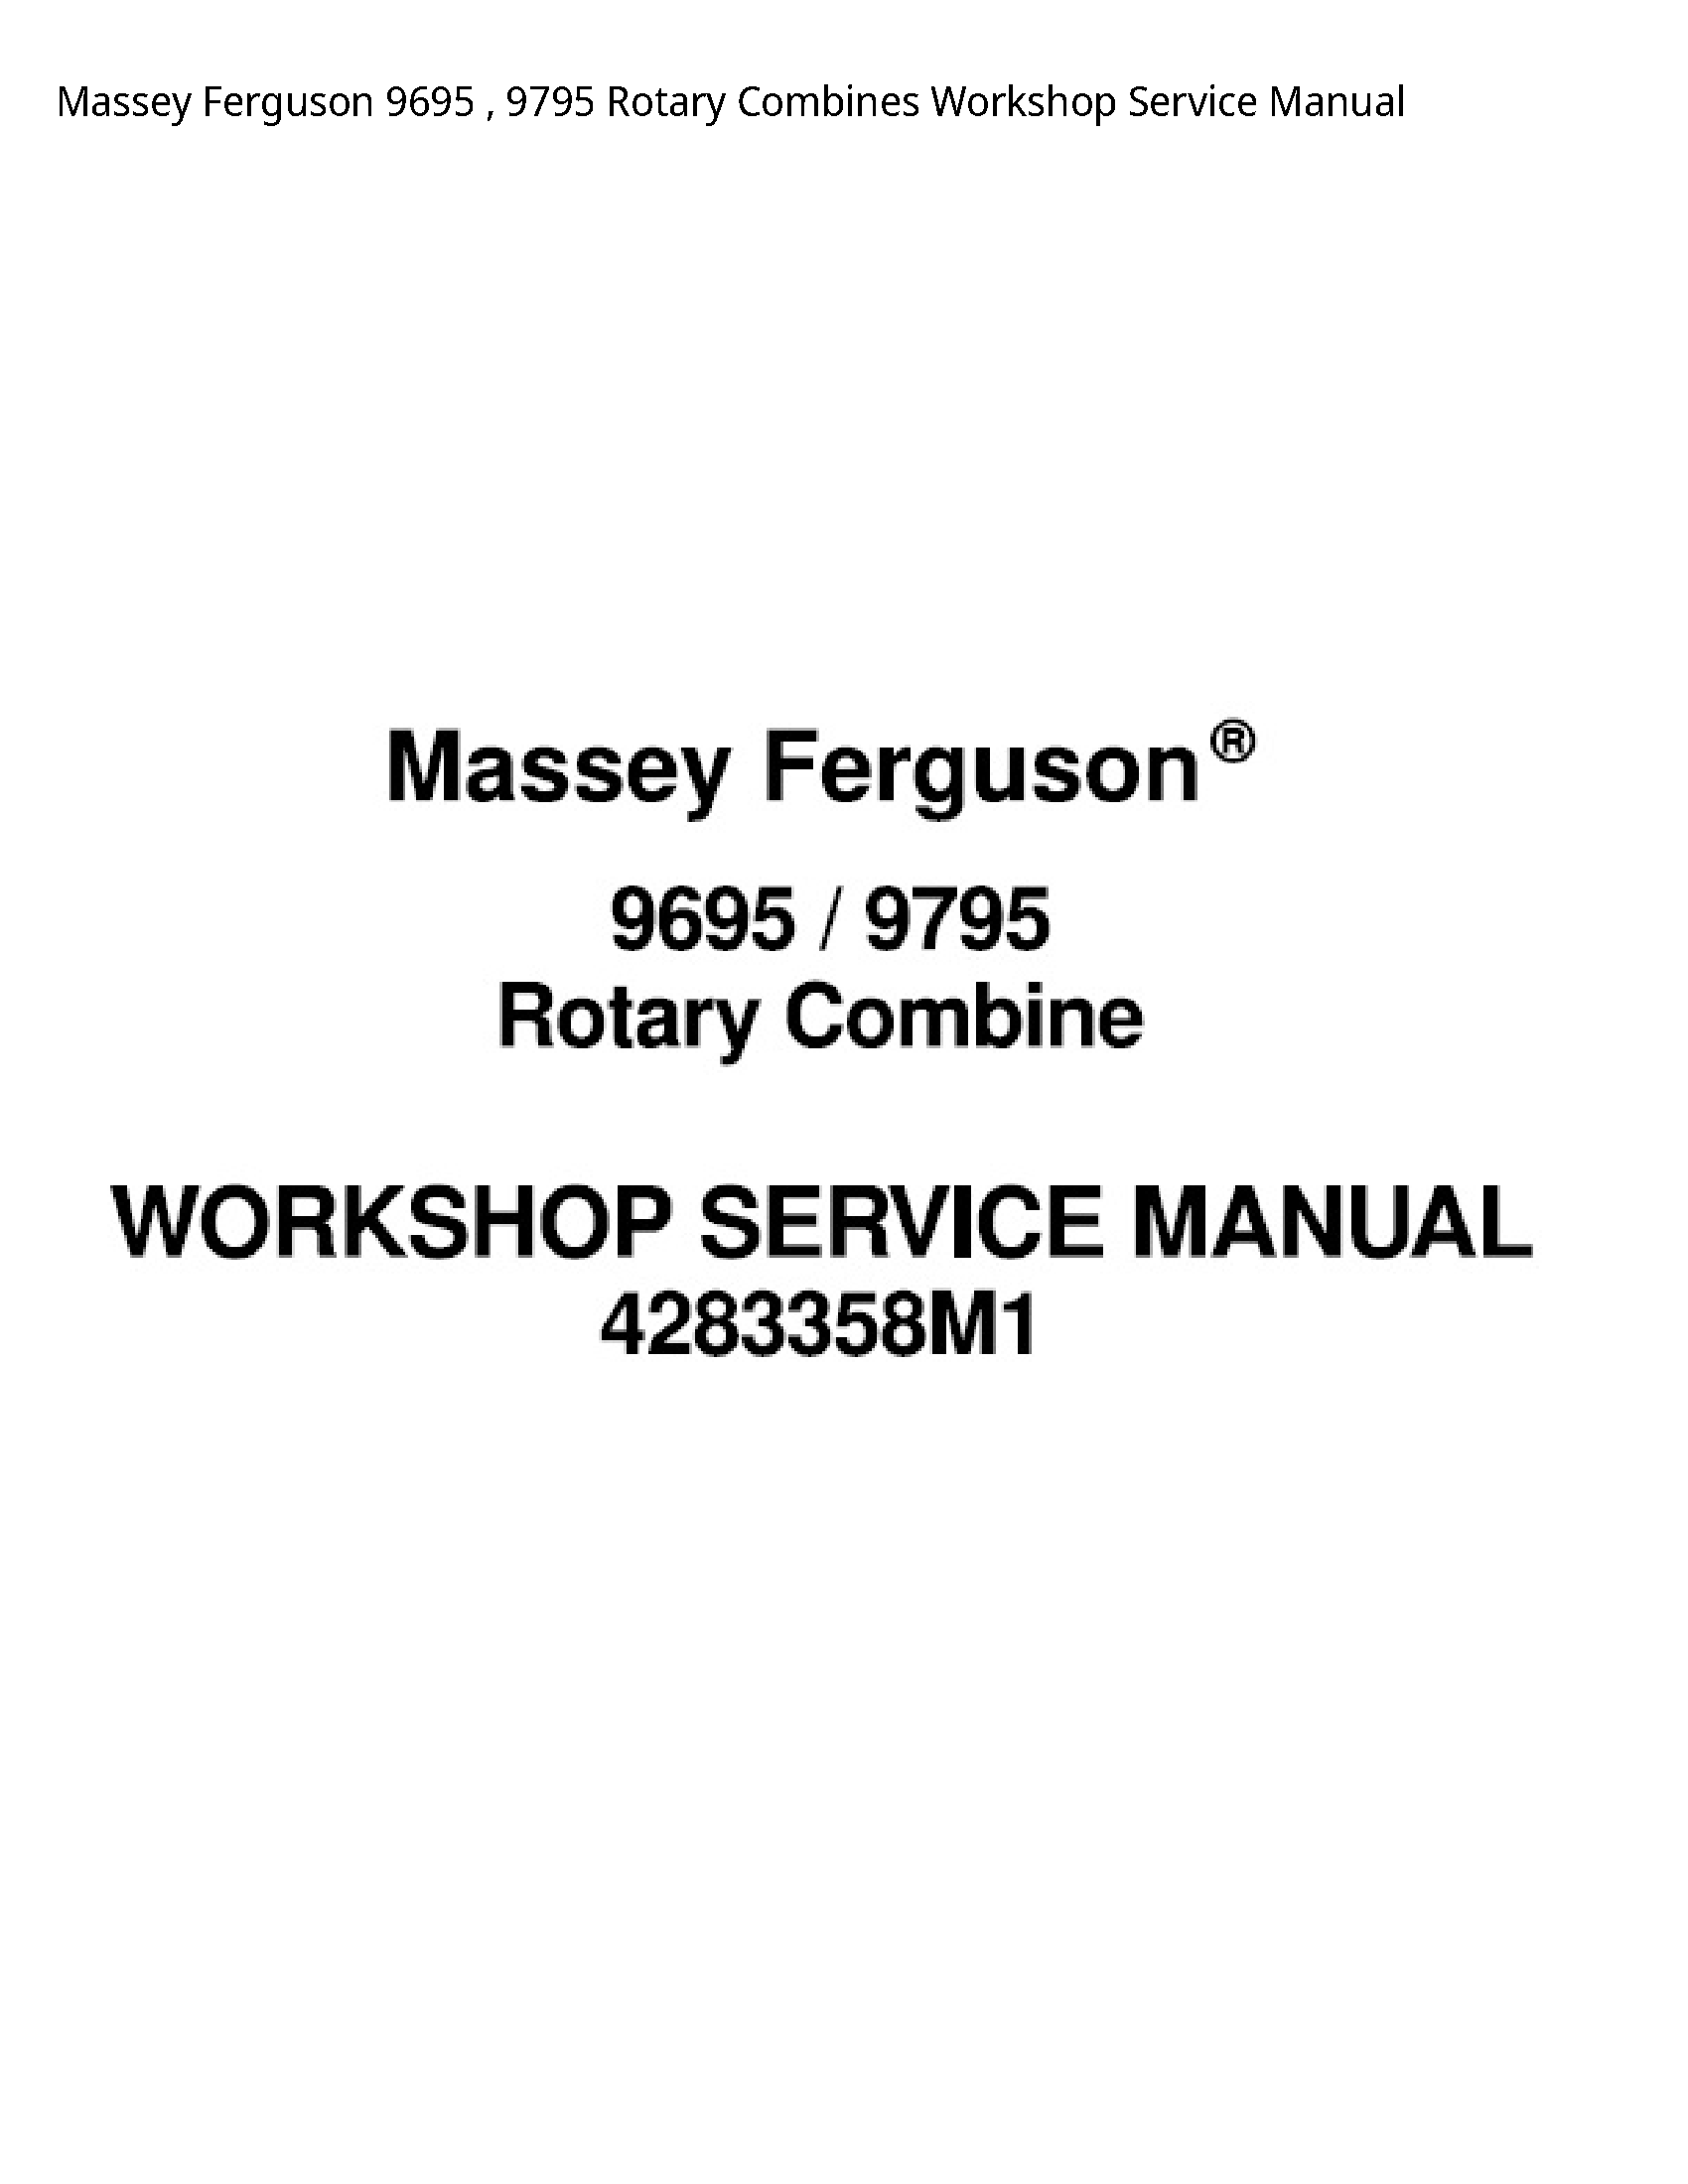 Massey Ferguson 9695 Rotary Combines Service manual